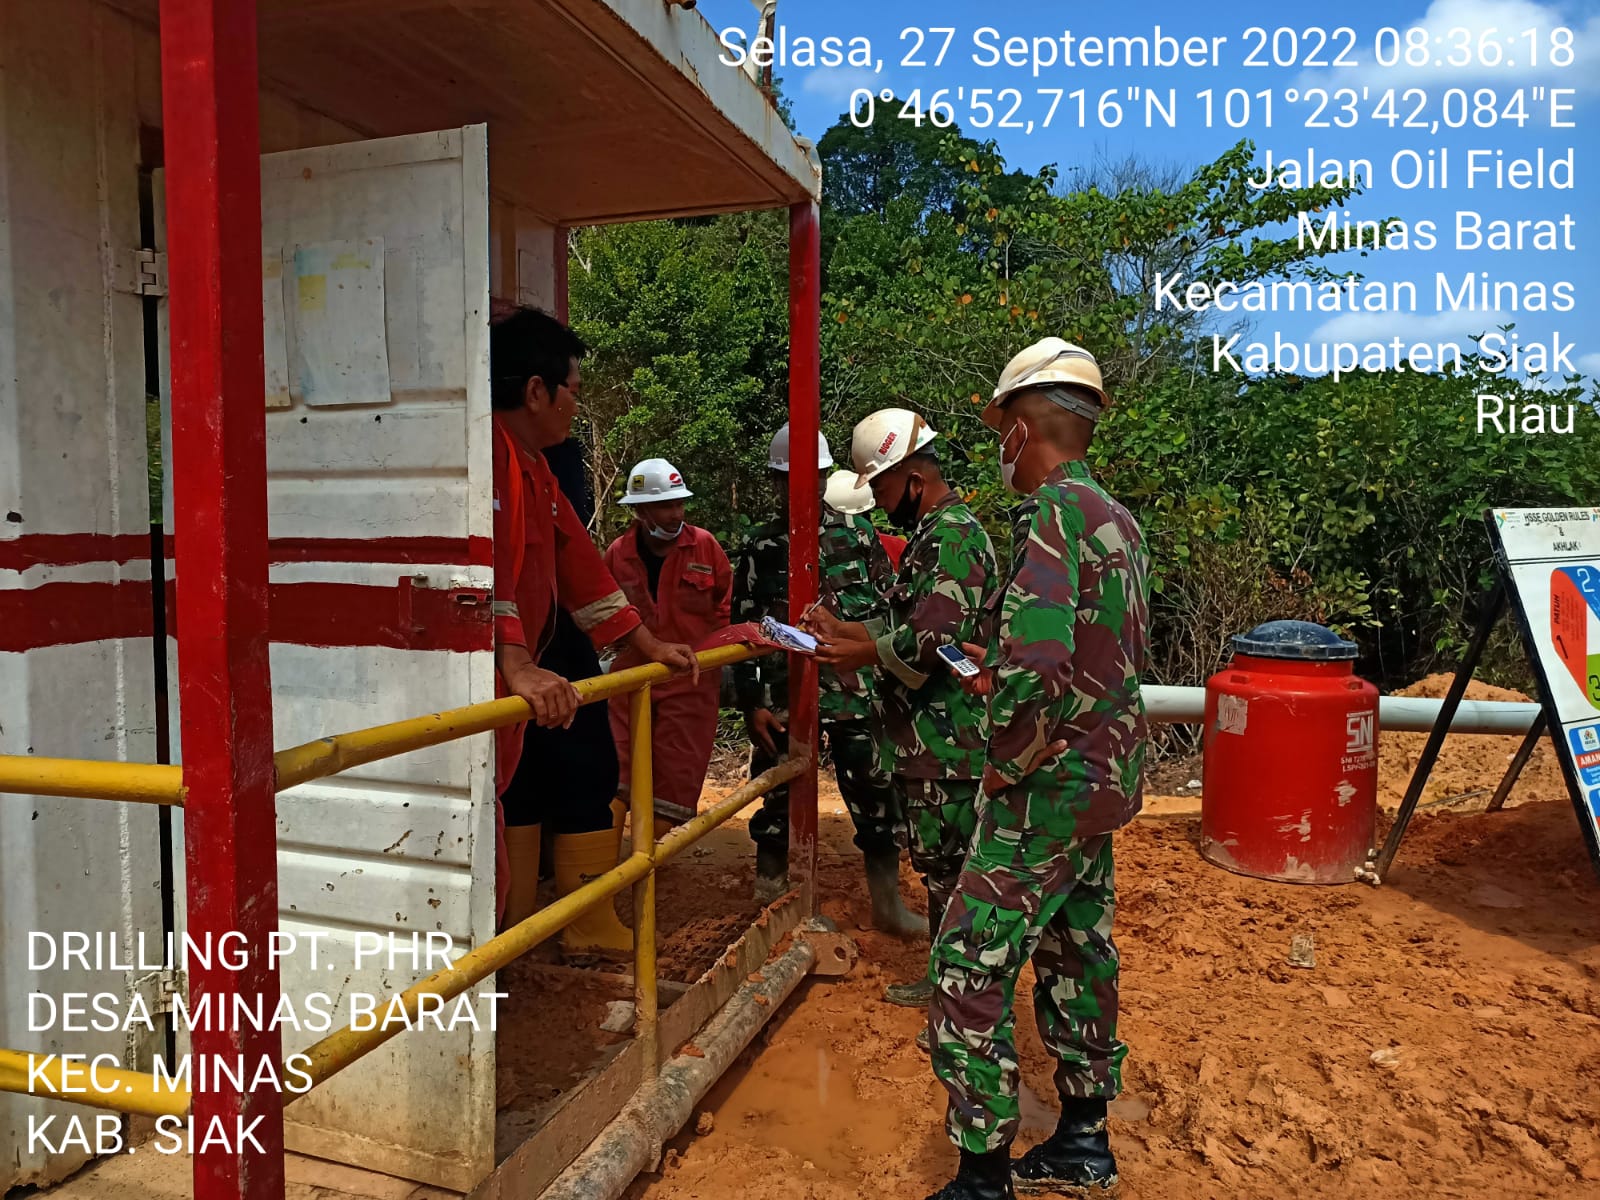 Serma Muhammad Nasir dan Serda Parjuni Kembali Patroli Drilling Demi Keamanan OVN di PT PHR Minas